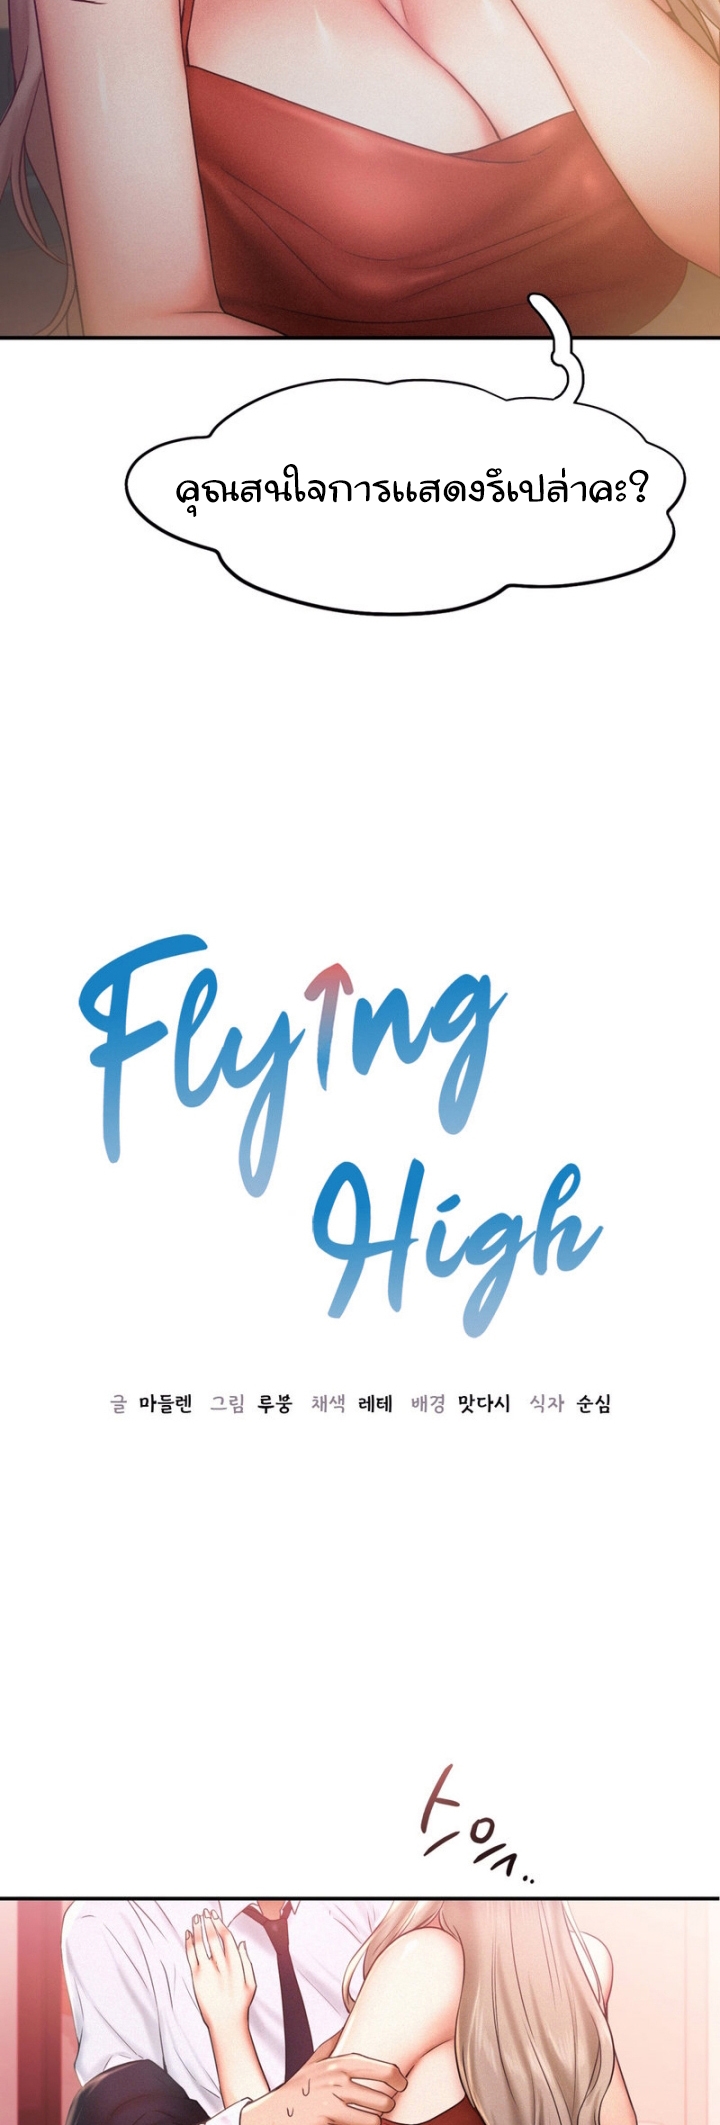 Flying High03